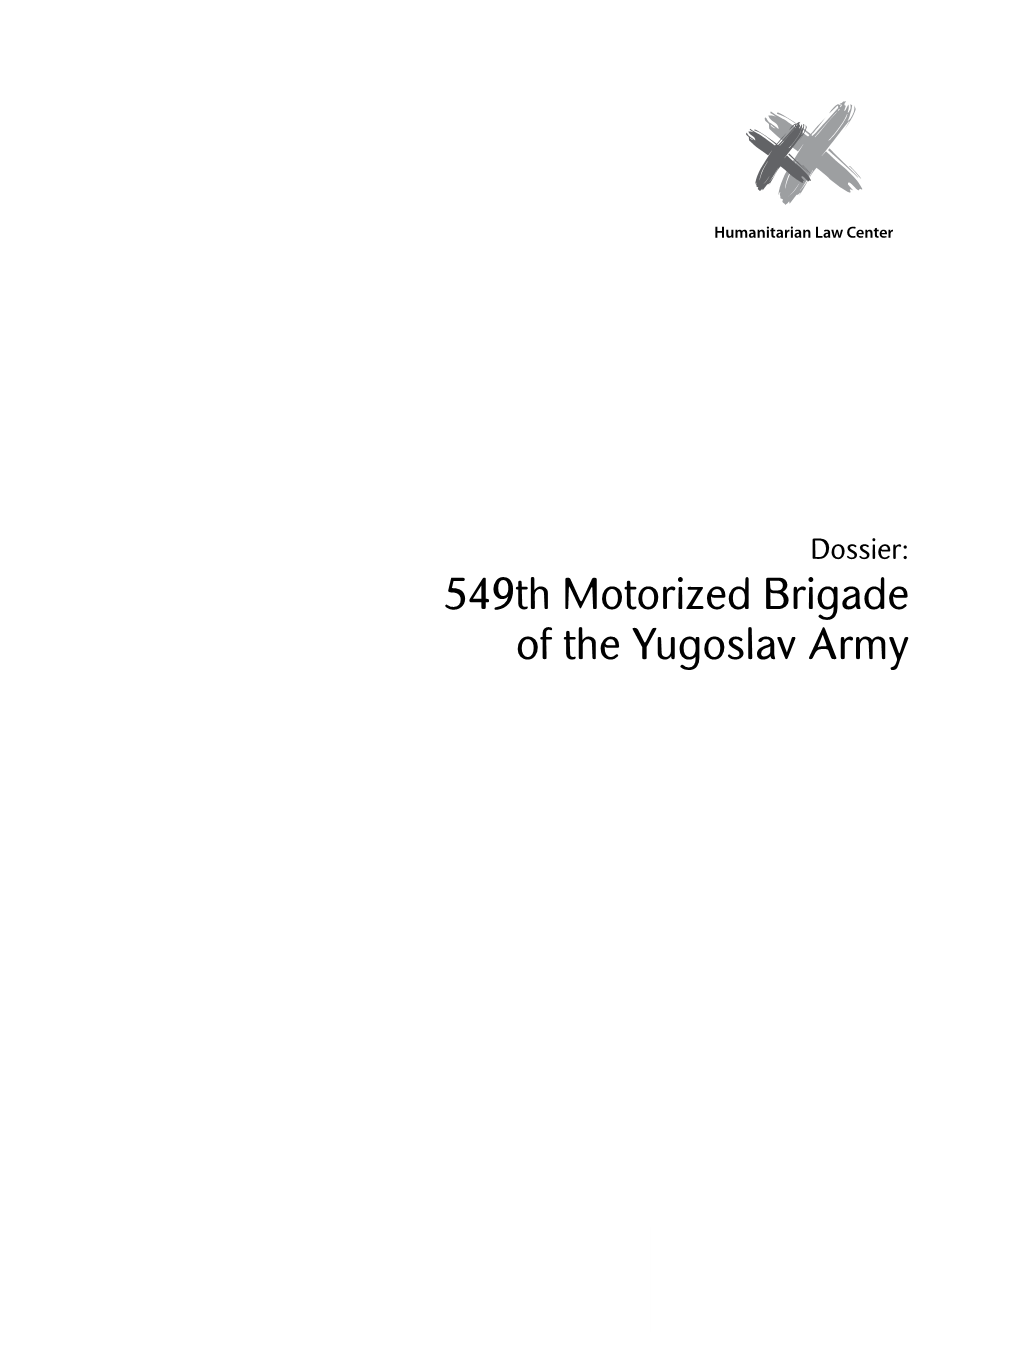 549Th Motorized Brigade of the Yugoslav Army